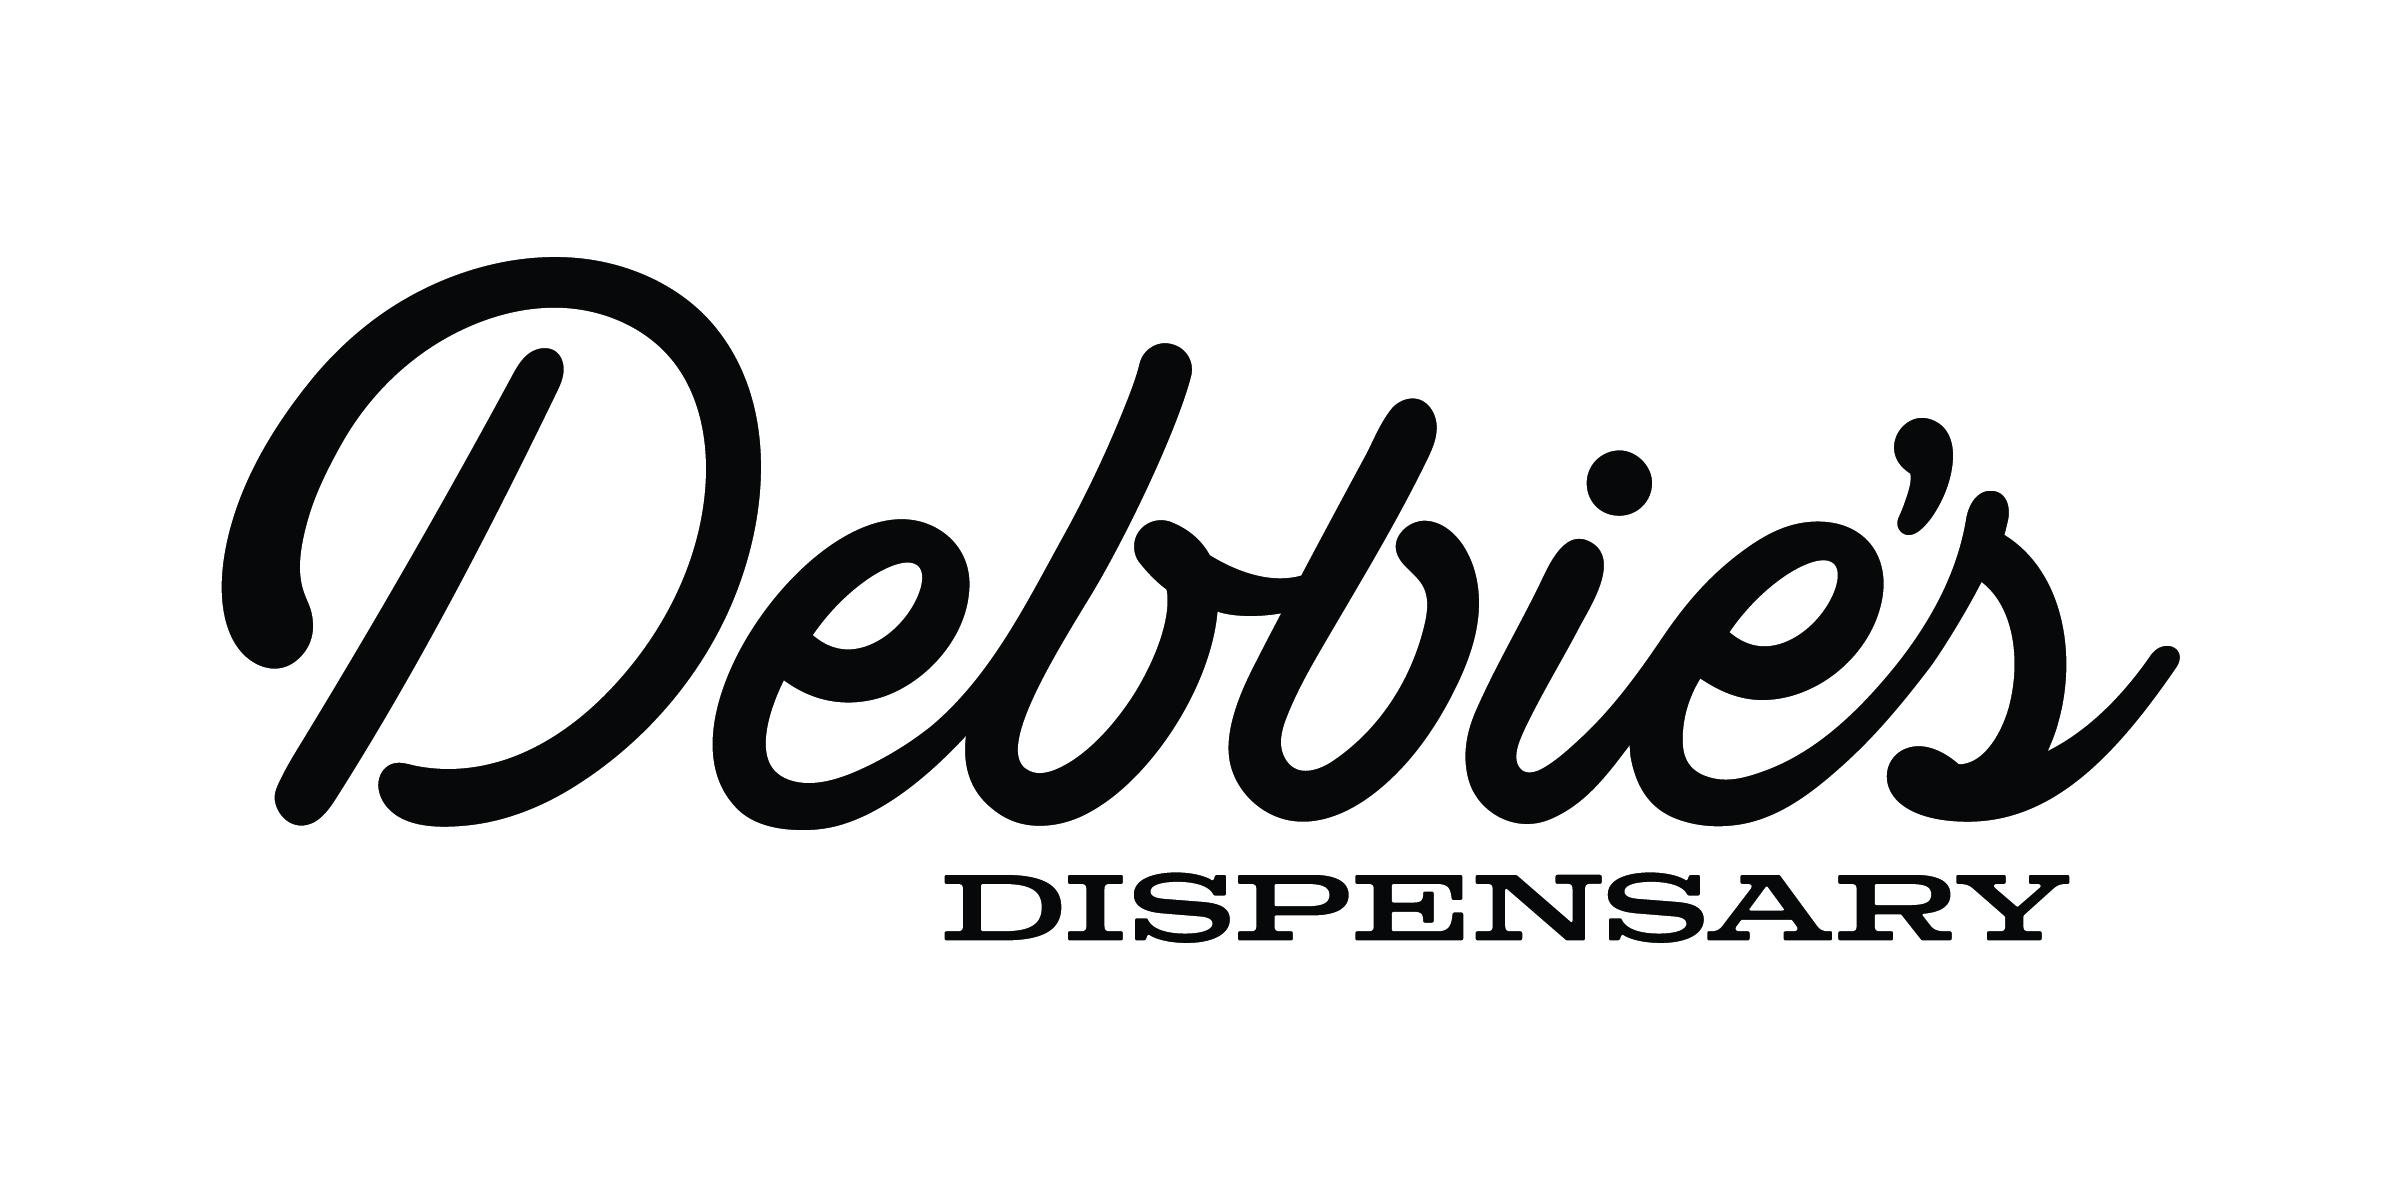 Debbie's Dispensary